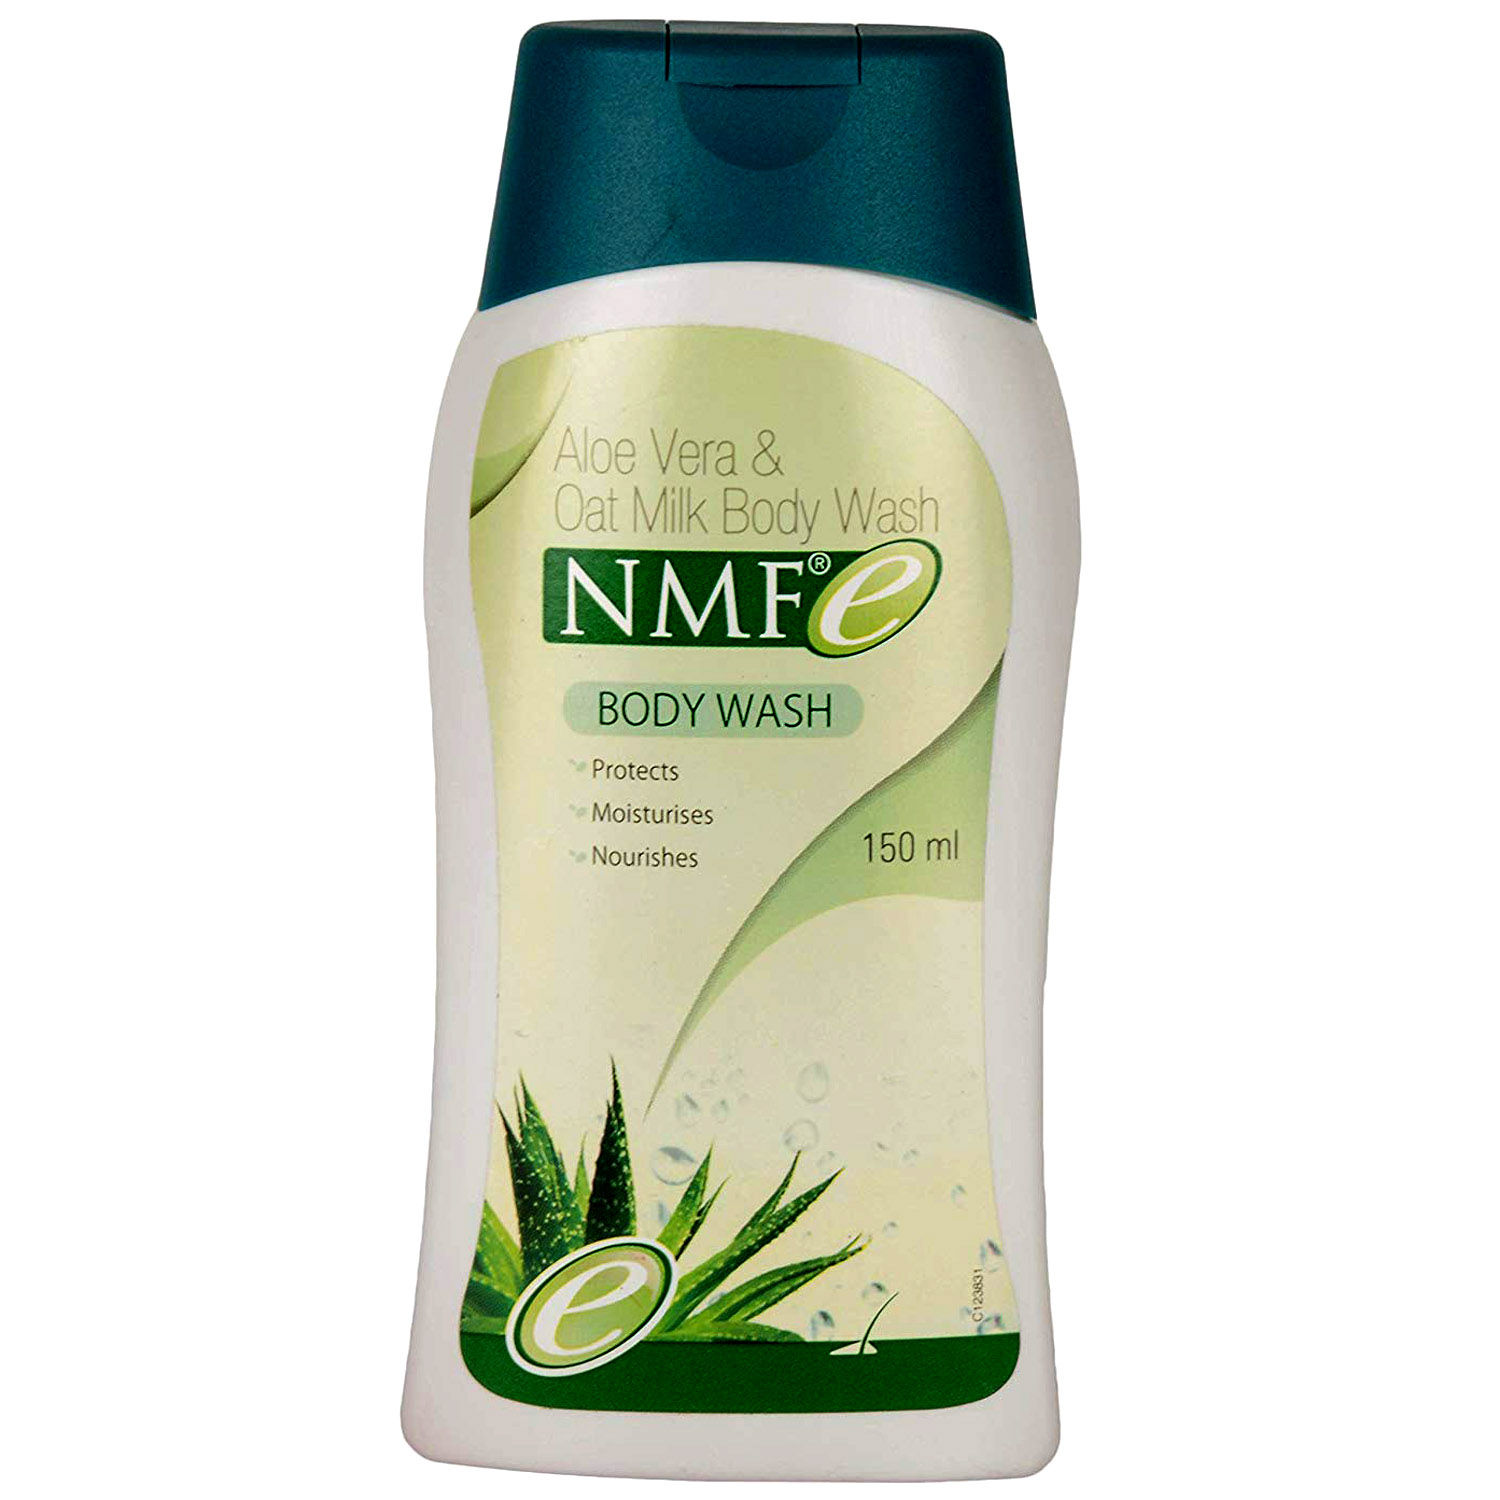 NMFE Body Wash, 150 ml, Pack of 1 